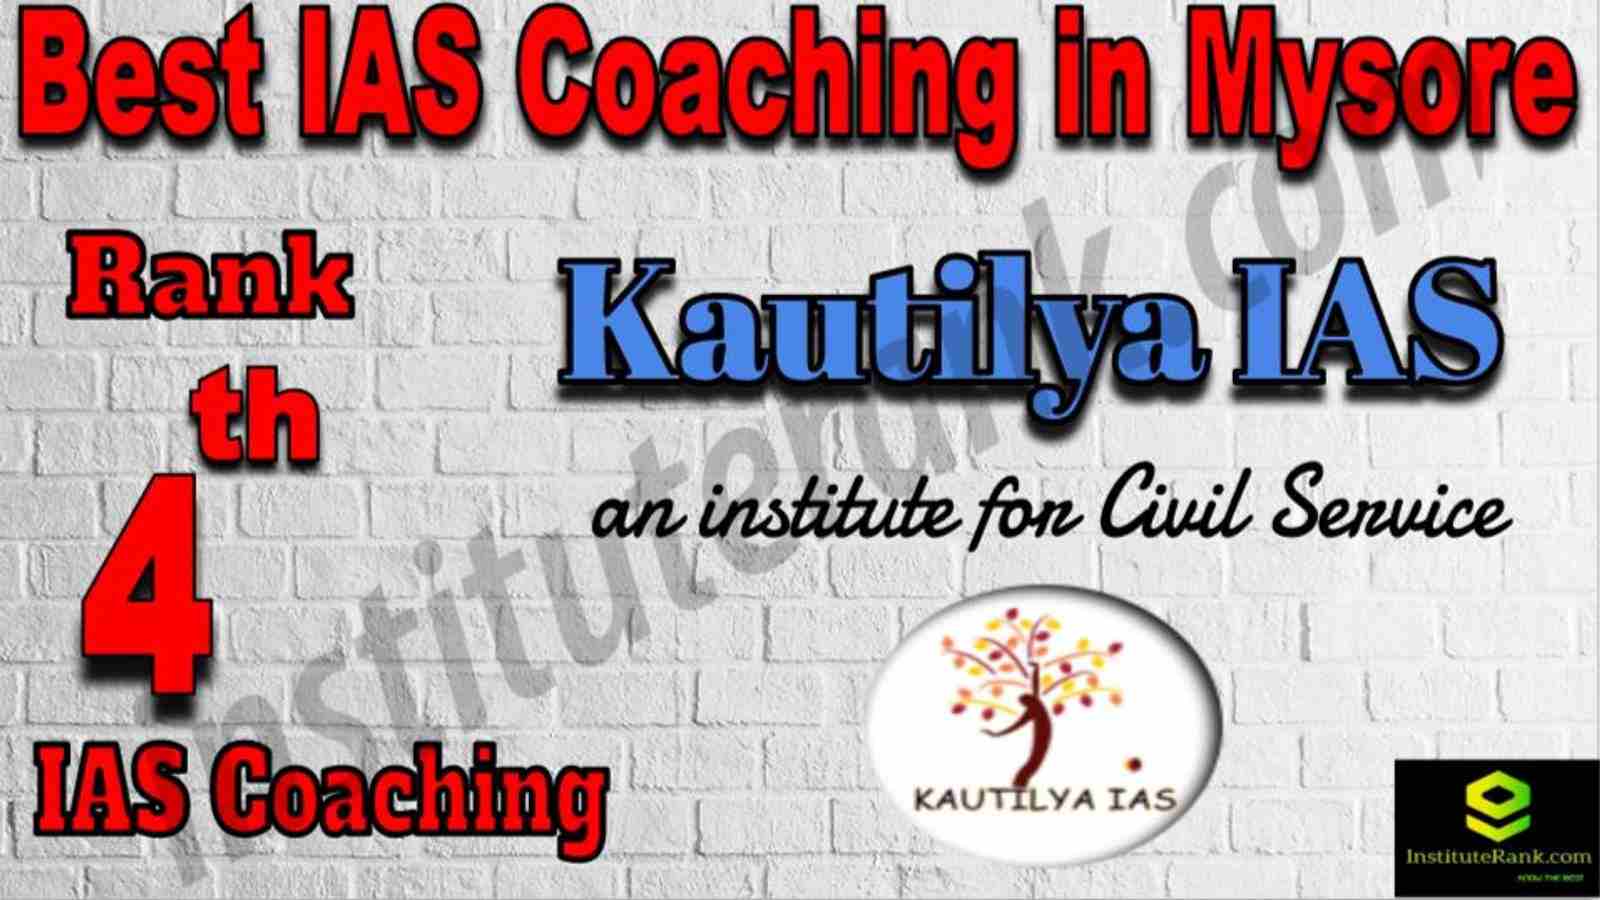 4th Best IAS Coaching in Mysore